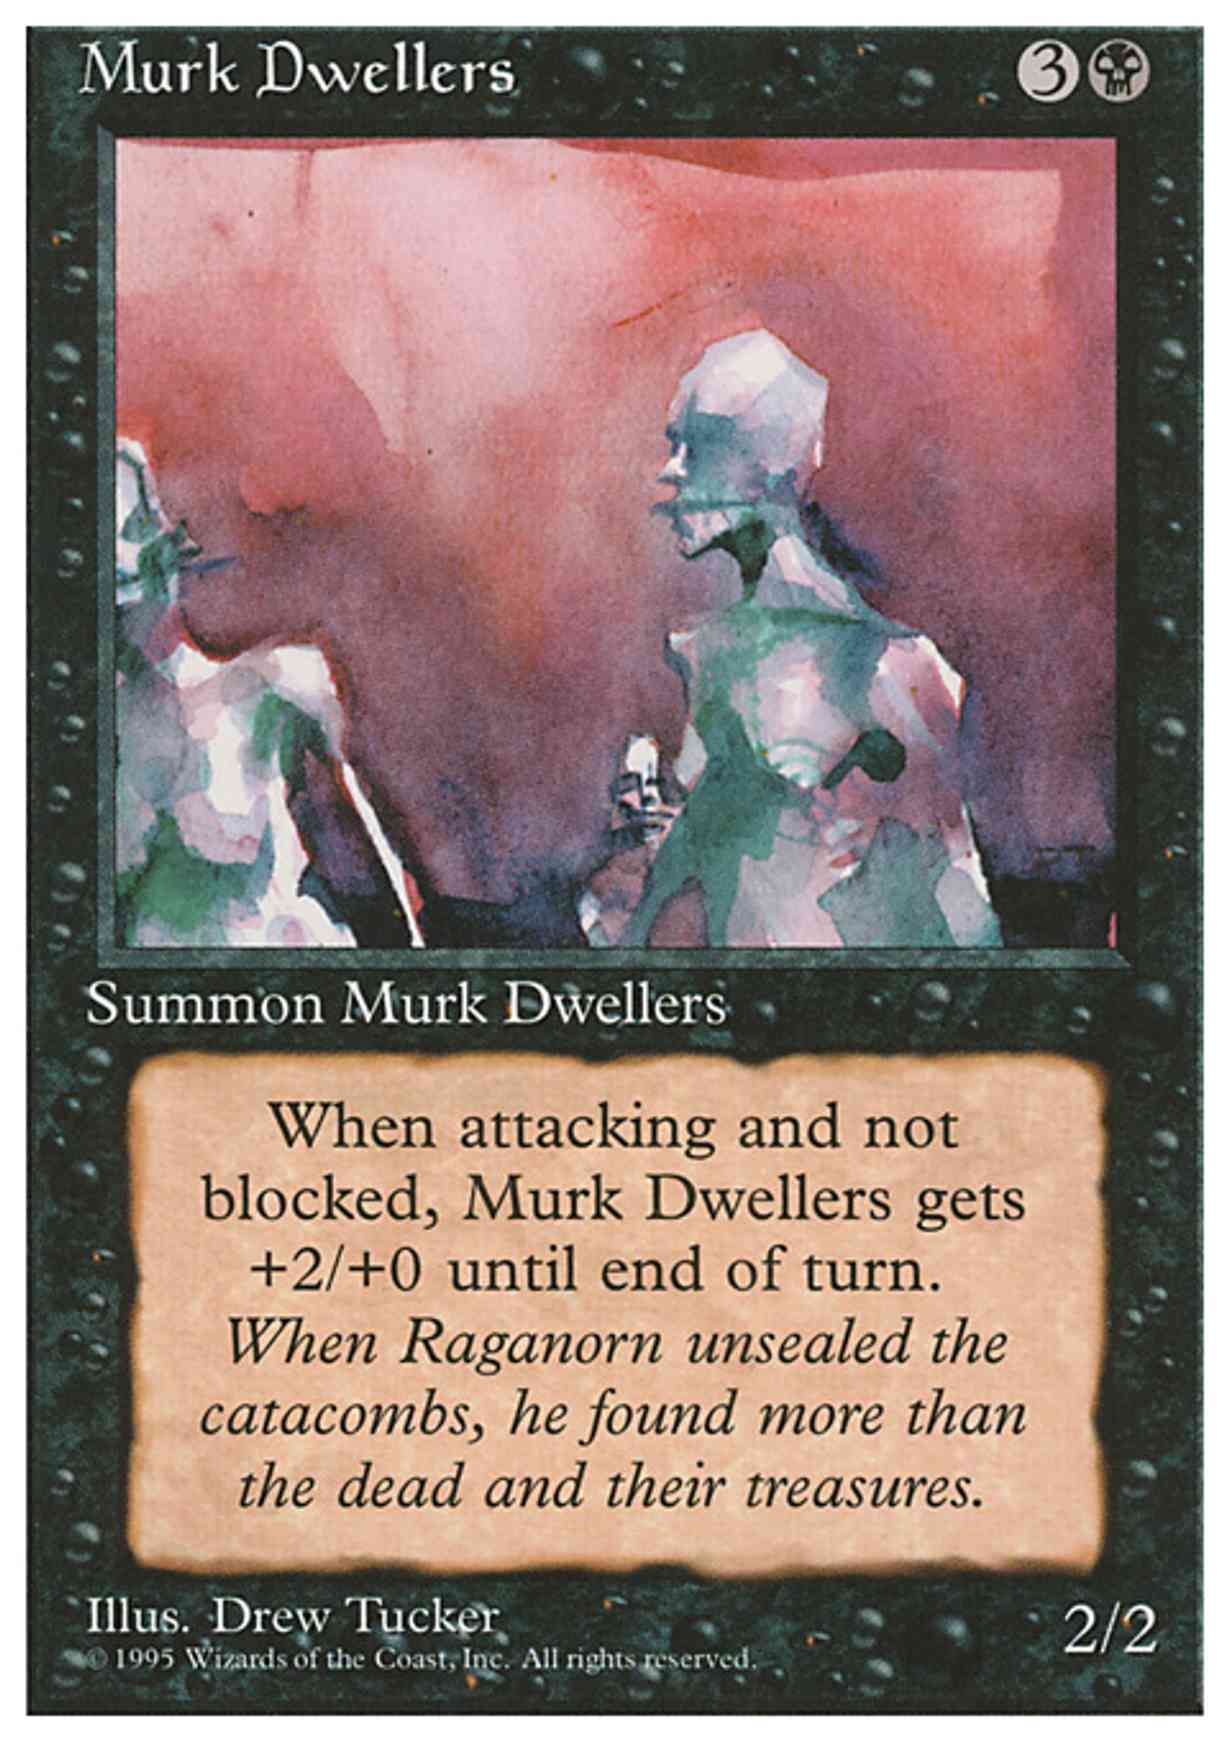 Murk Dwellers magic card front